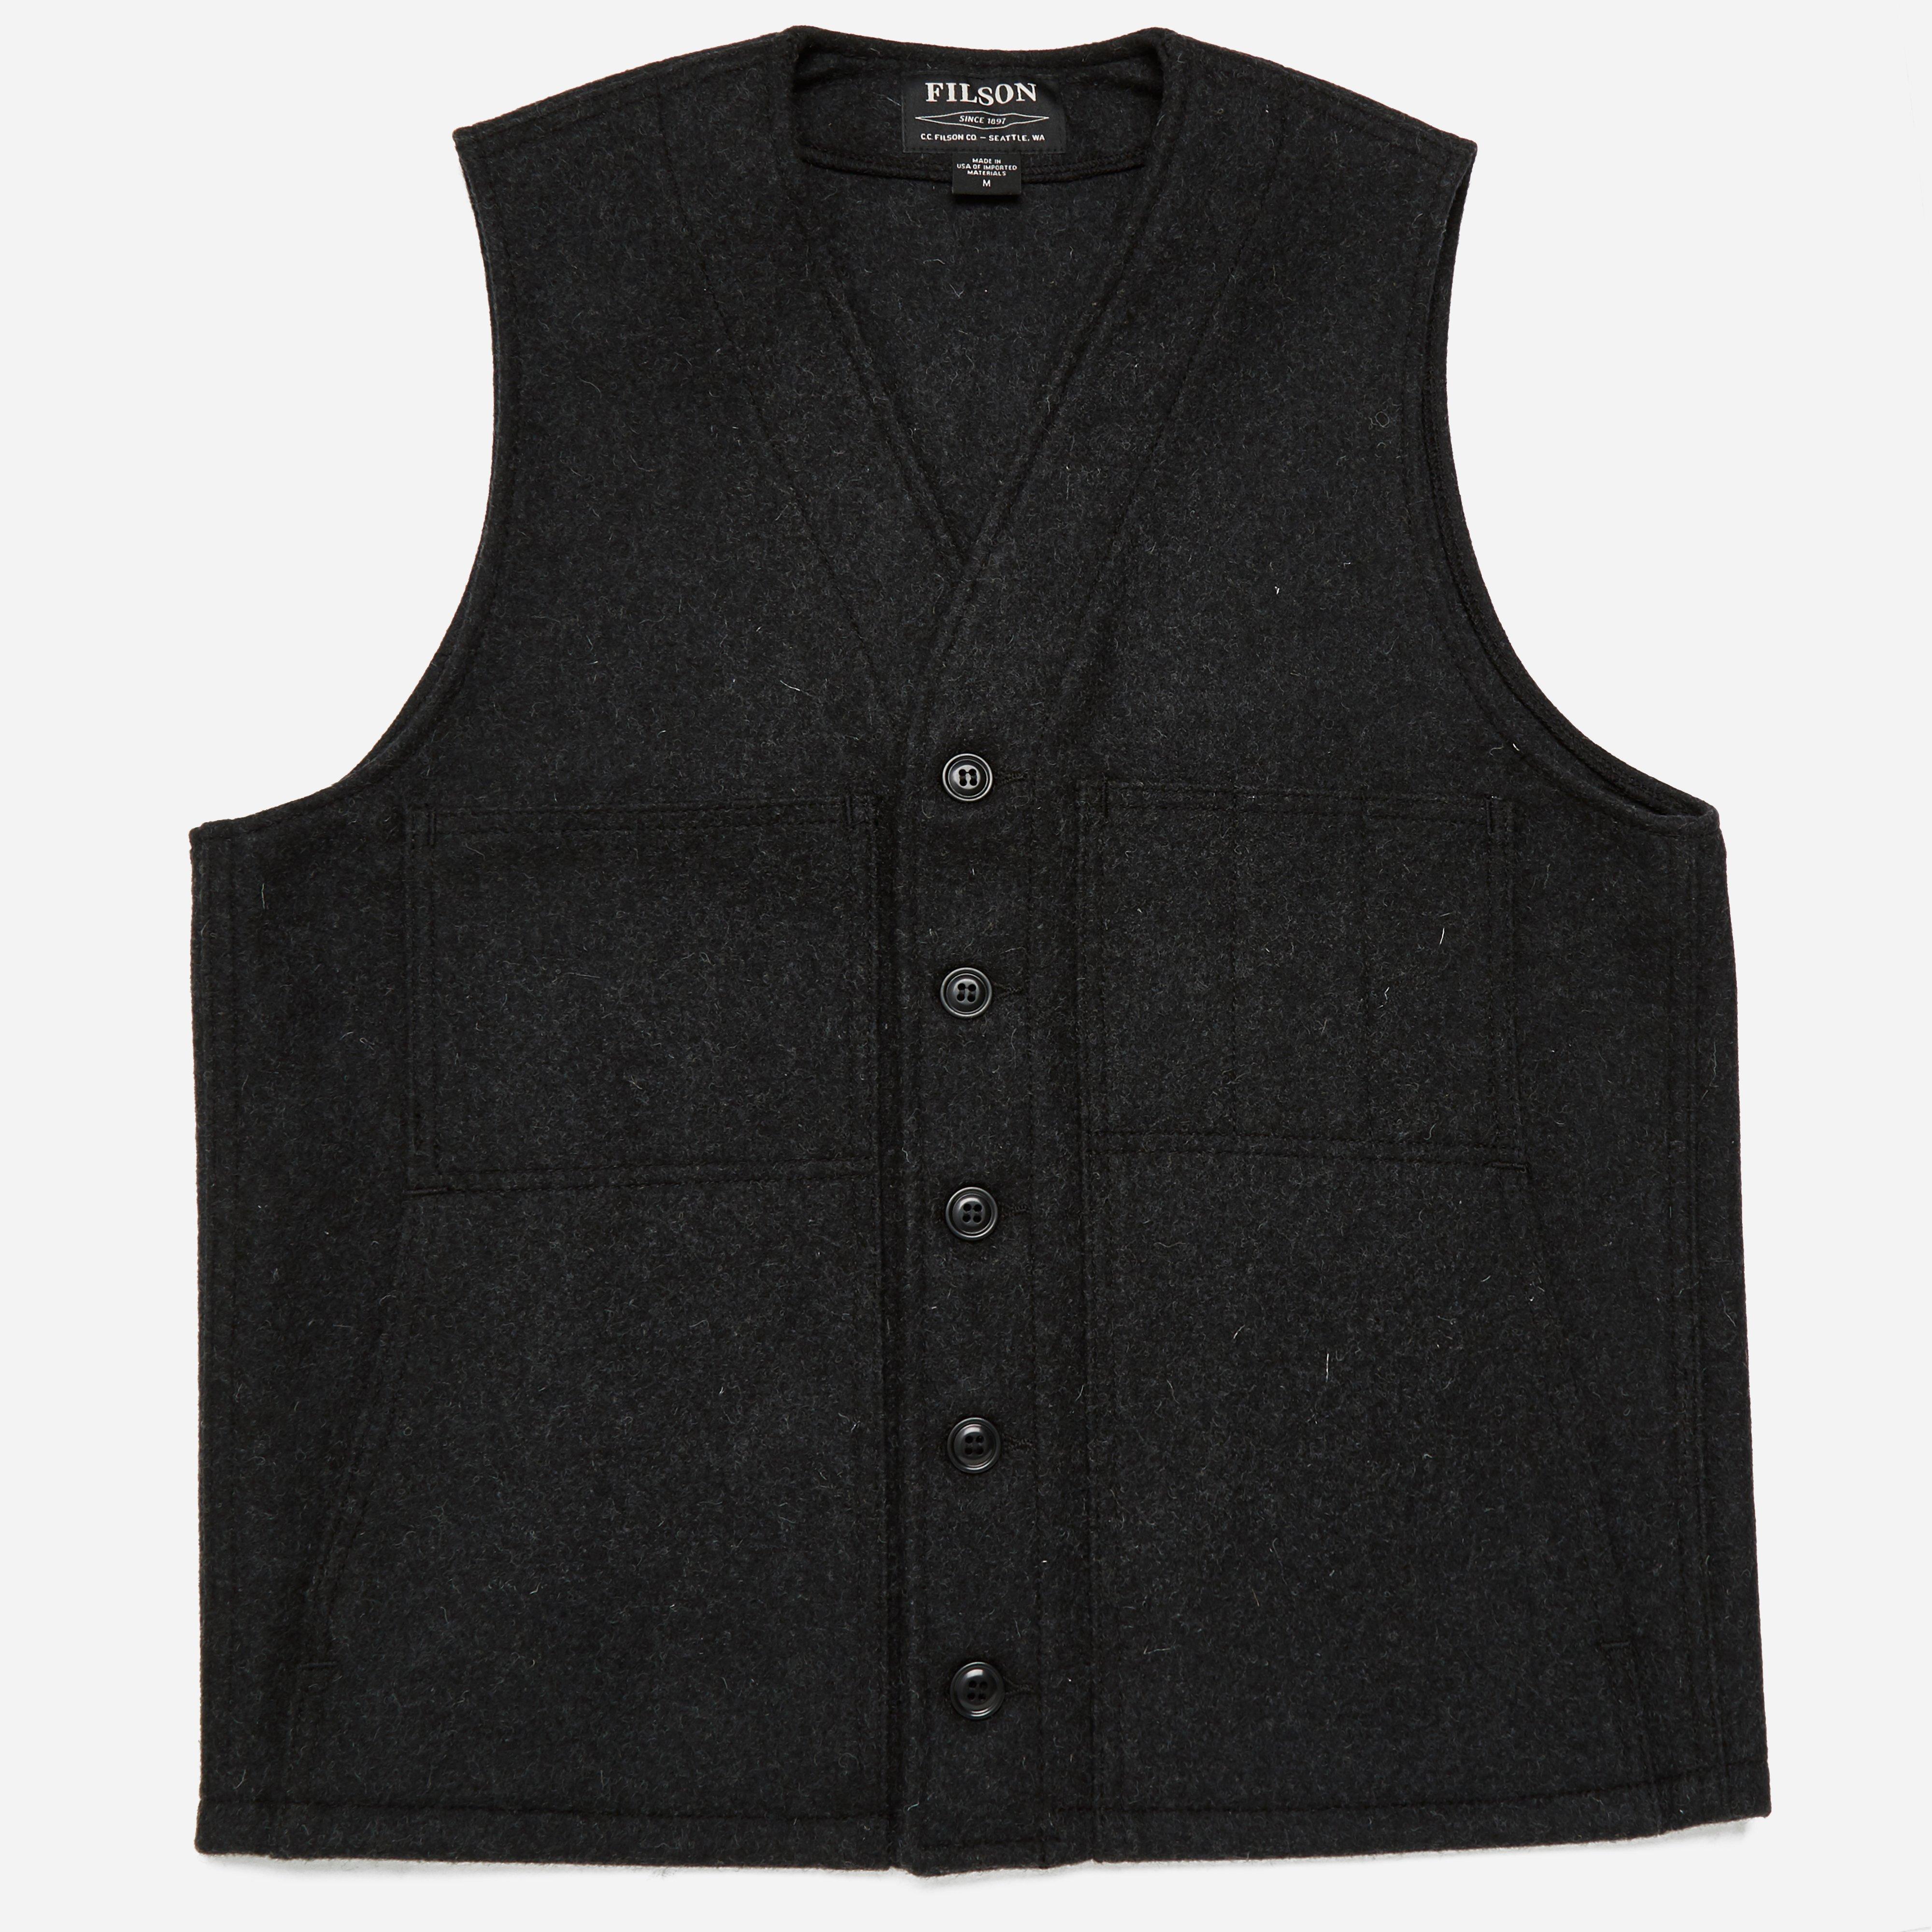 Lyst - Filson Mackinaw Wool Vest in Black for Men